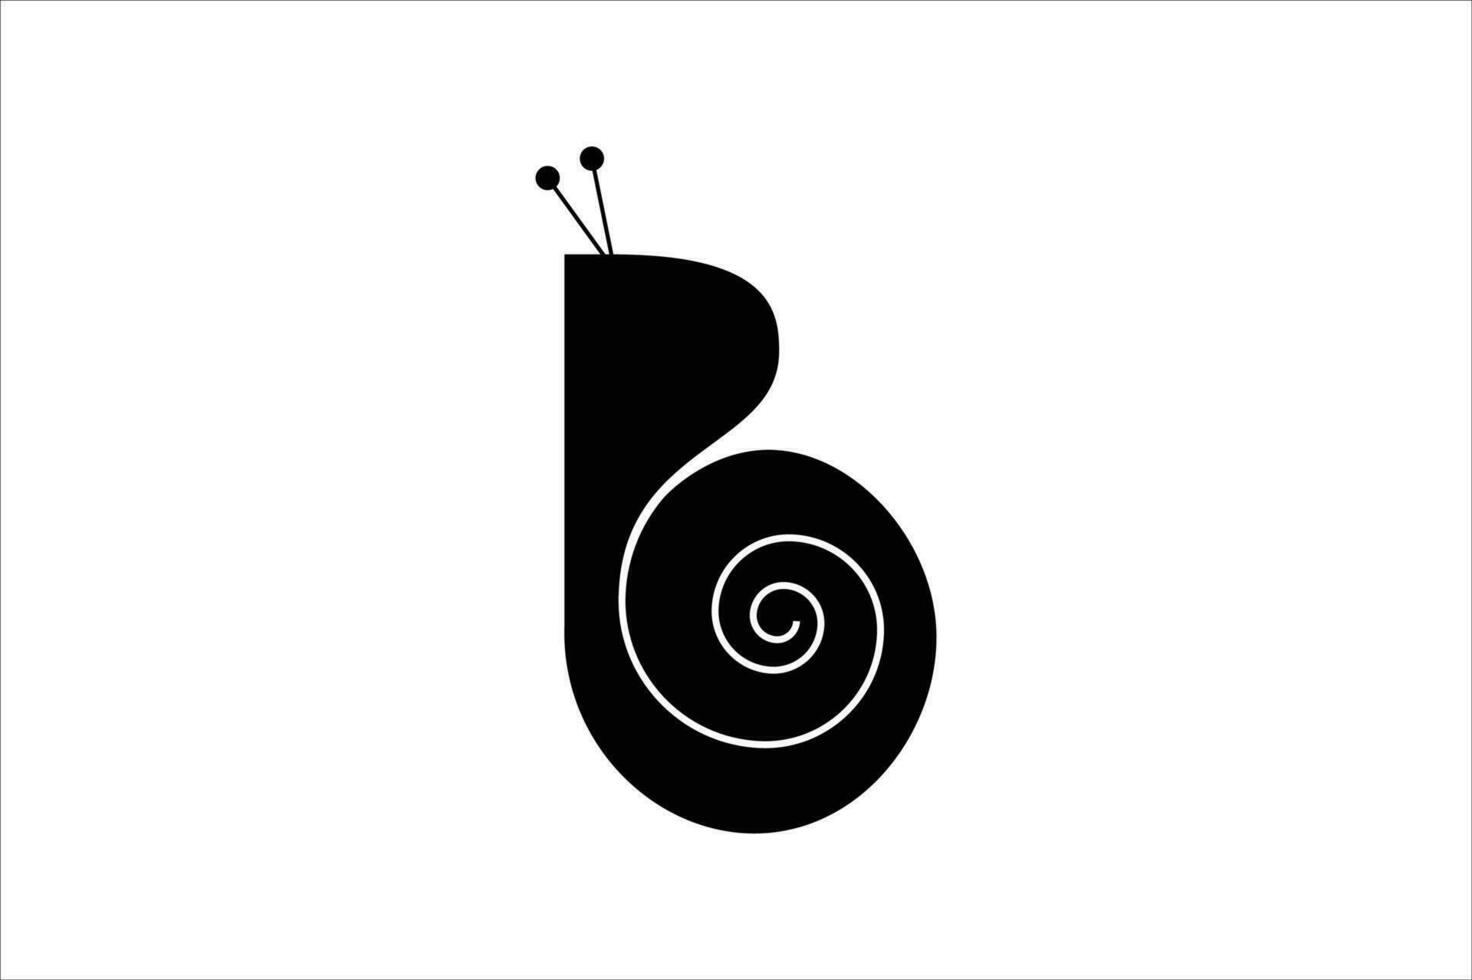 B latter and snail creative vector logo design template